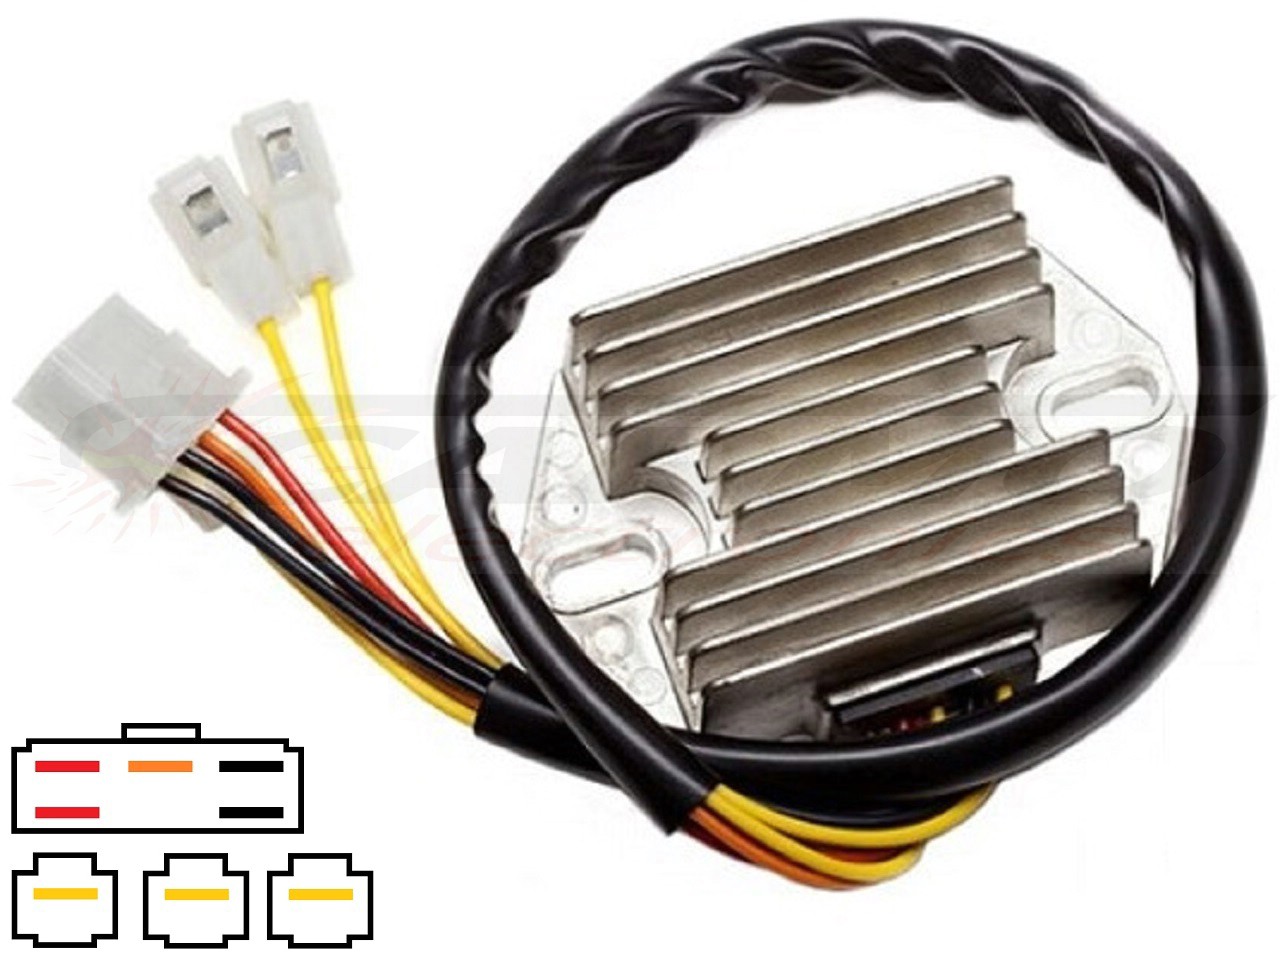 CARR751 Suzuki Intruder MOSFET Voltage regulator rectifier - Clique na Imagem para Fechar